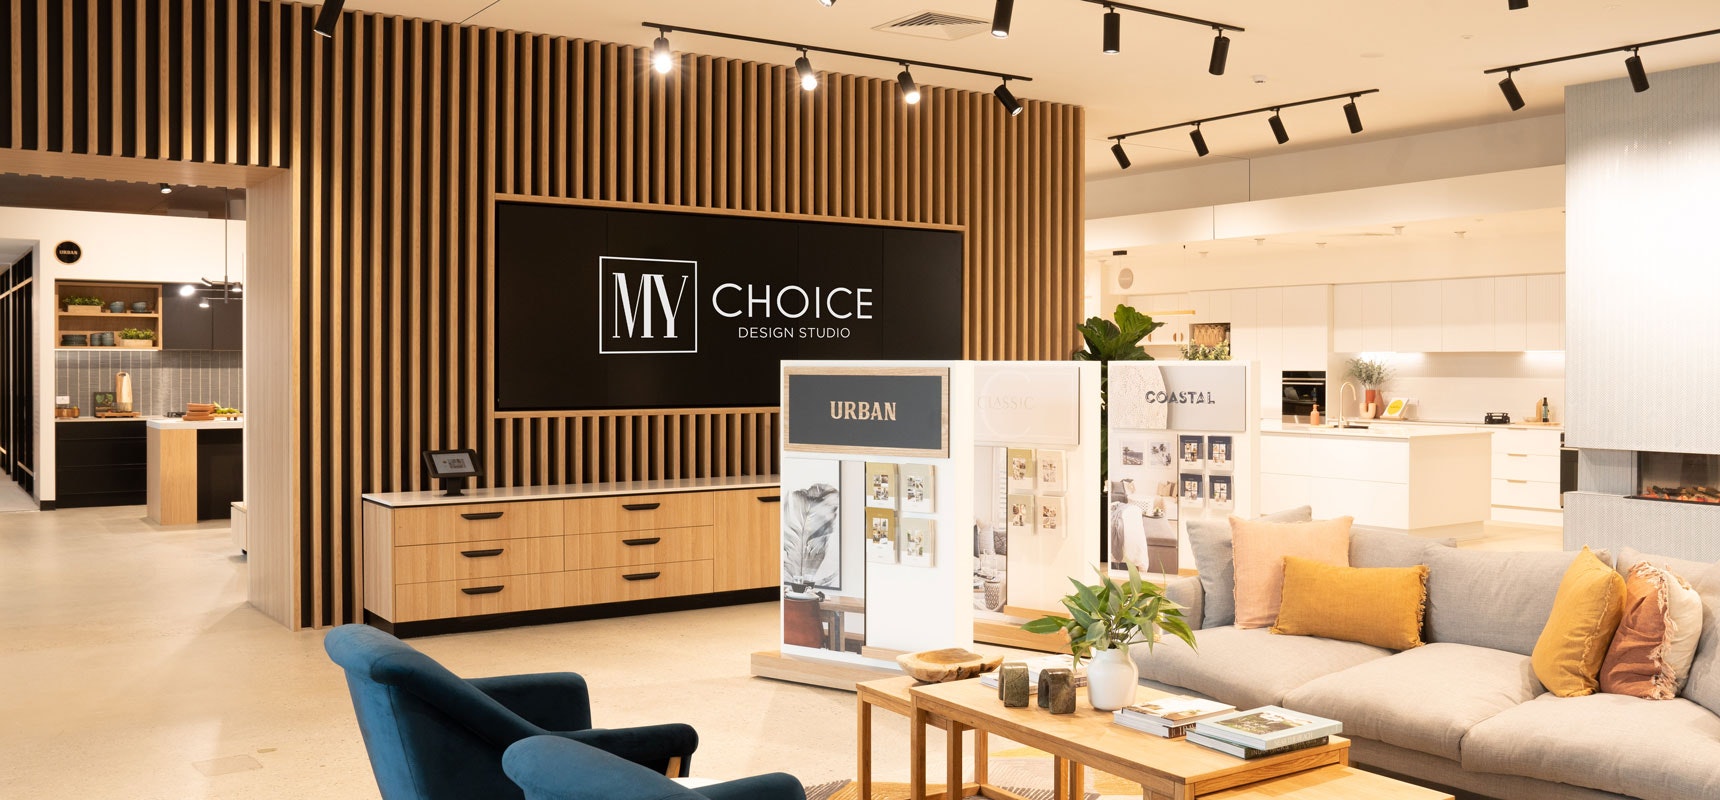 MyChoice Design Studio South Australia